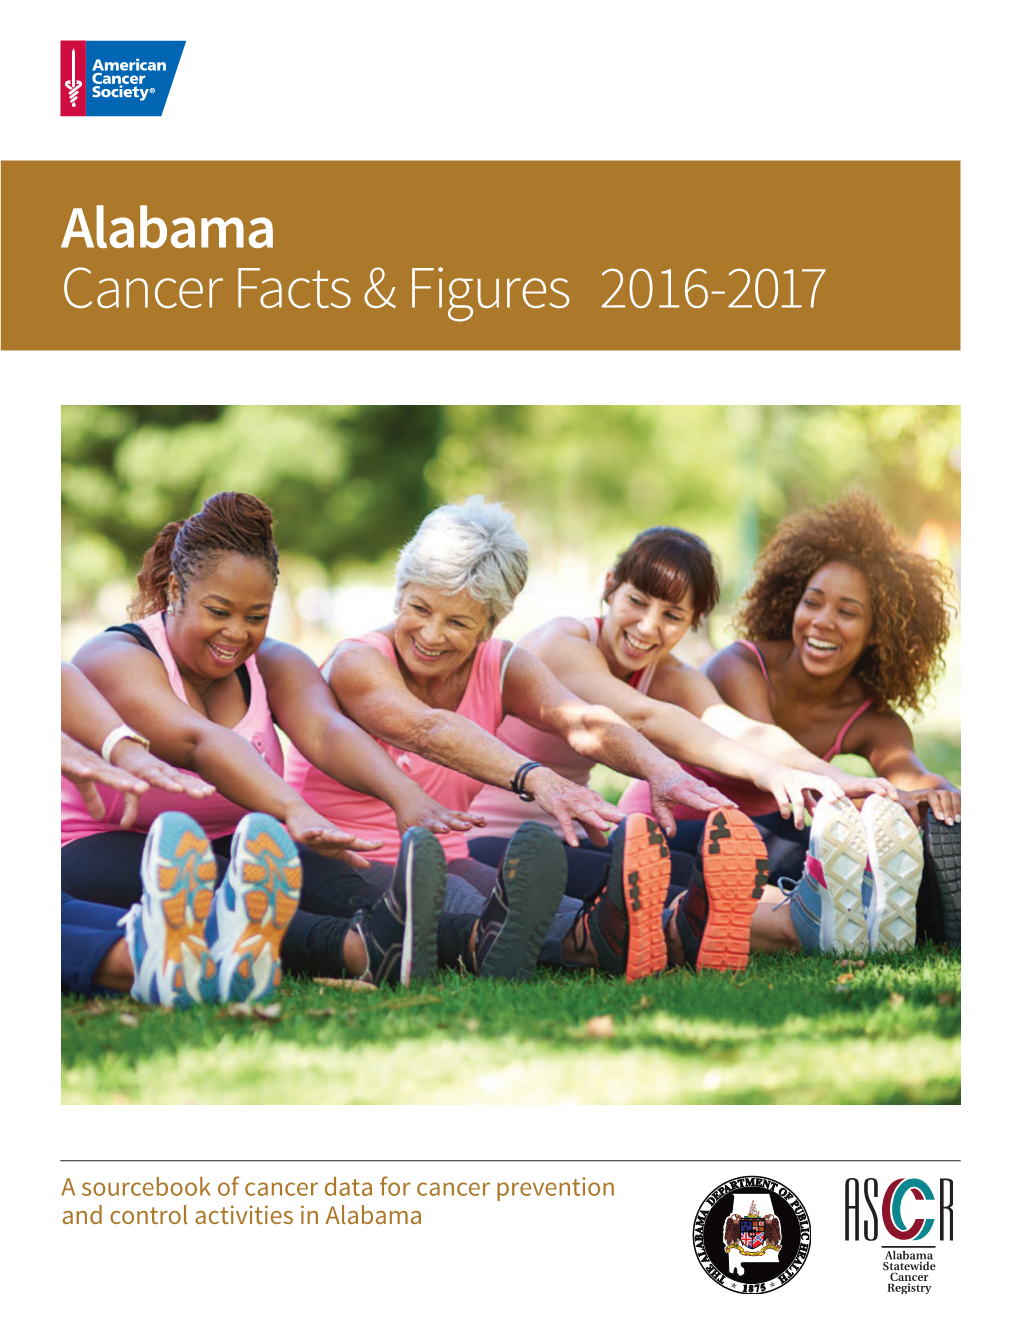 Alabama Cancer Facts & Figures, 2016-2017